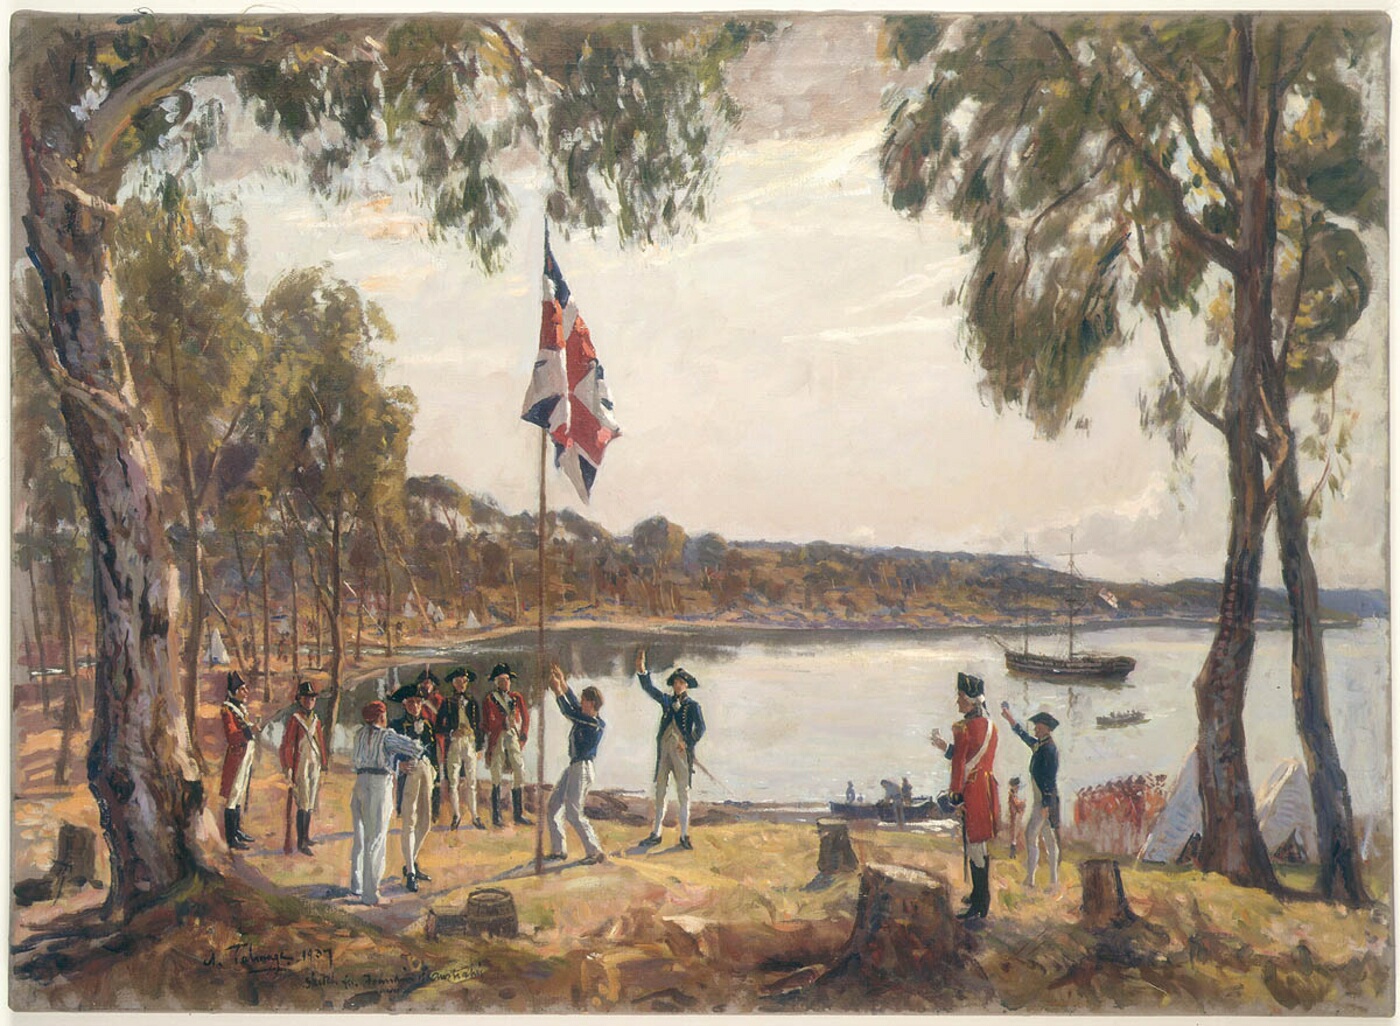 The Founding of Australia  By Capt  Arthur Phillip R N  Sydney Cove Jan  26th 1788